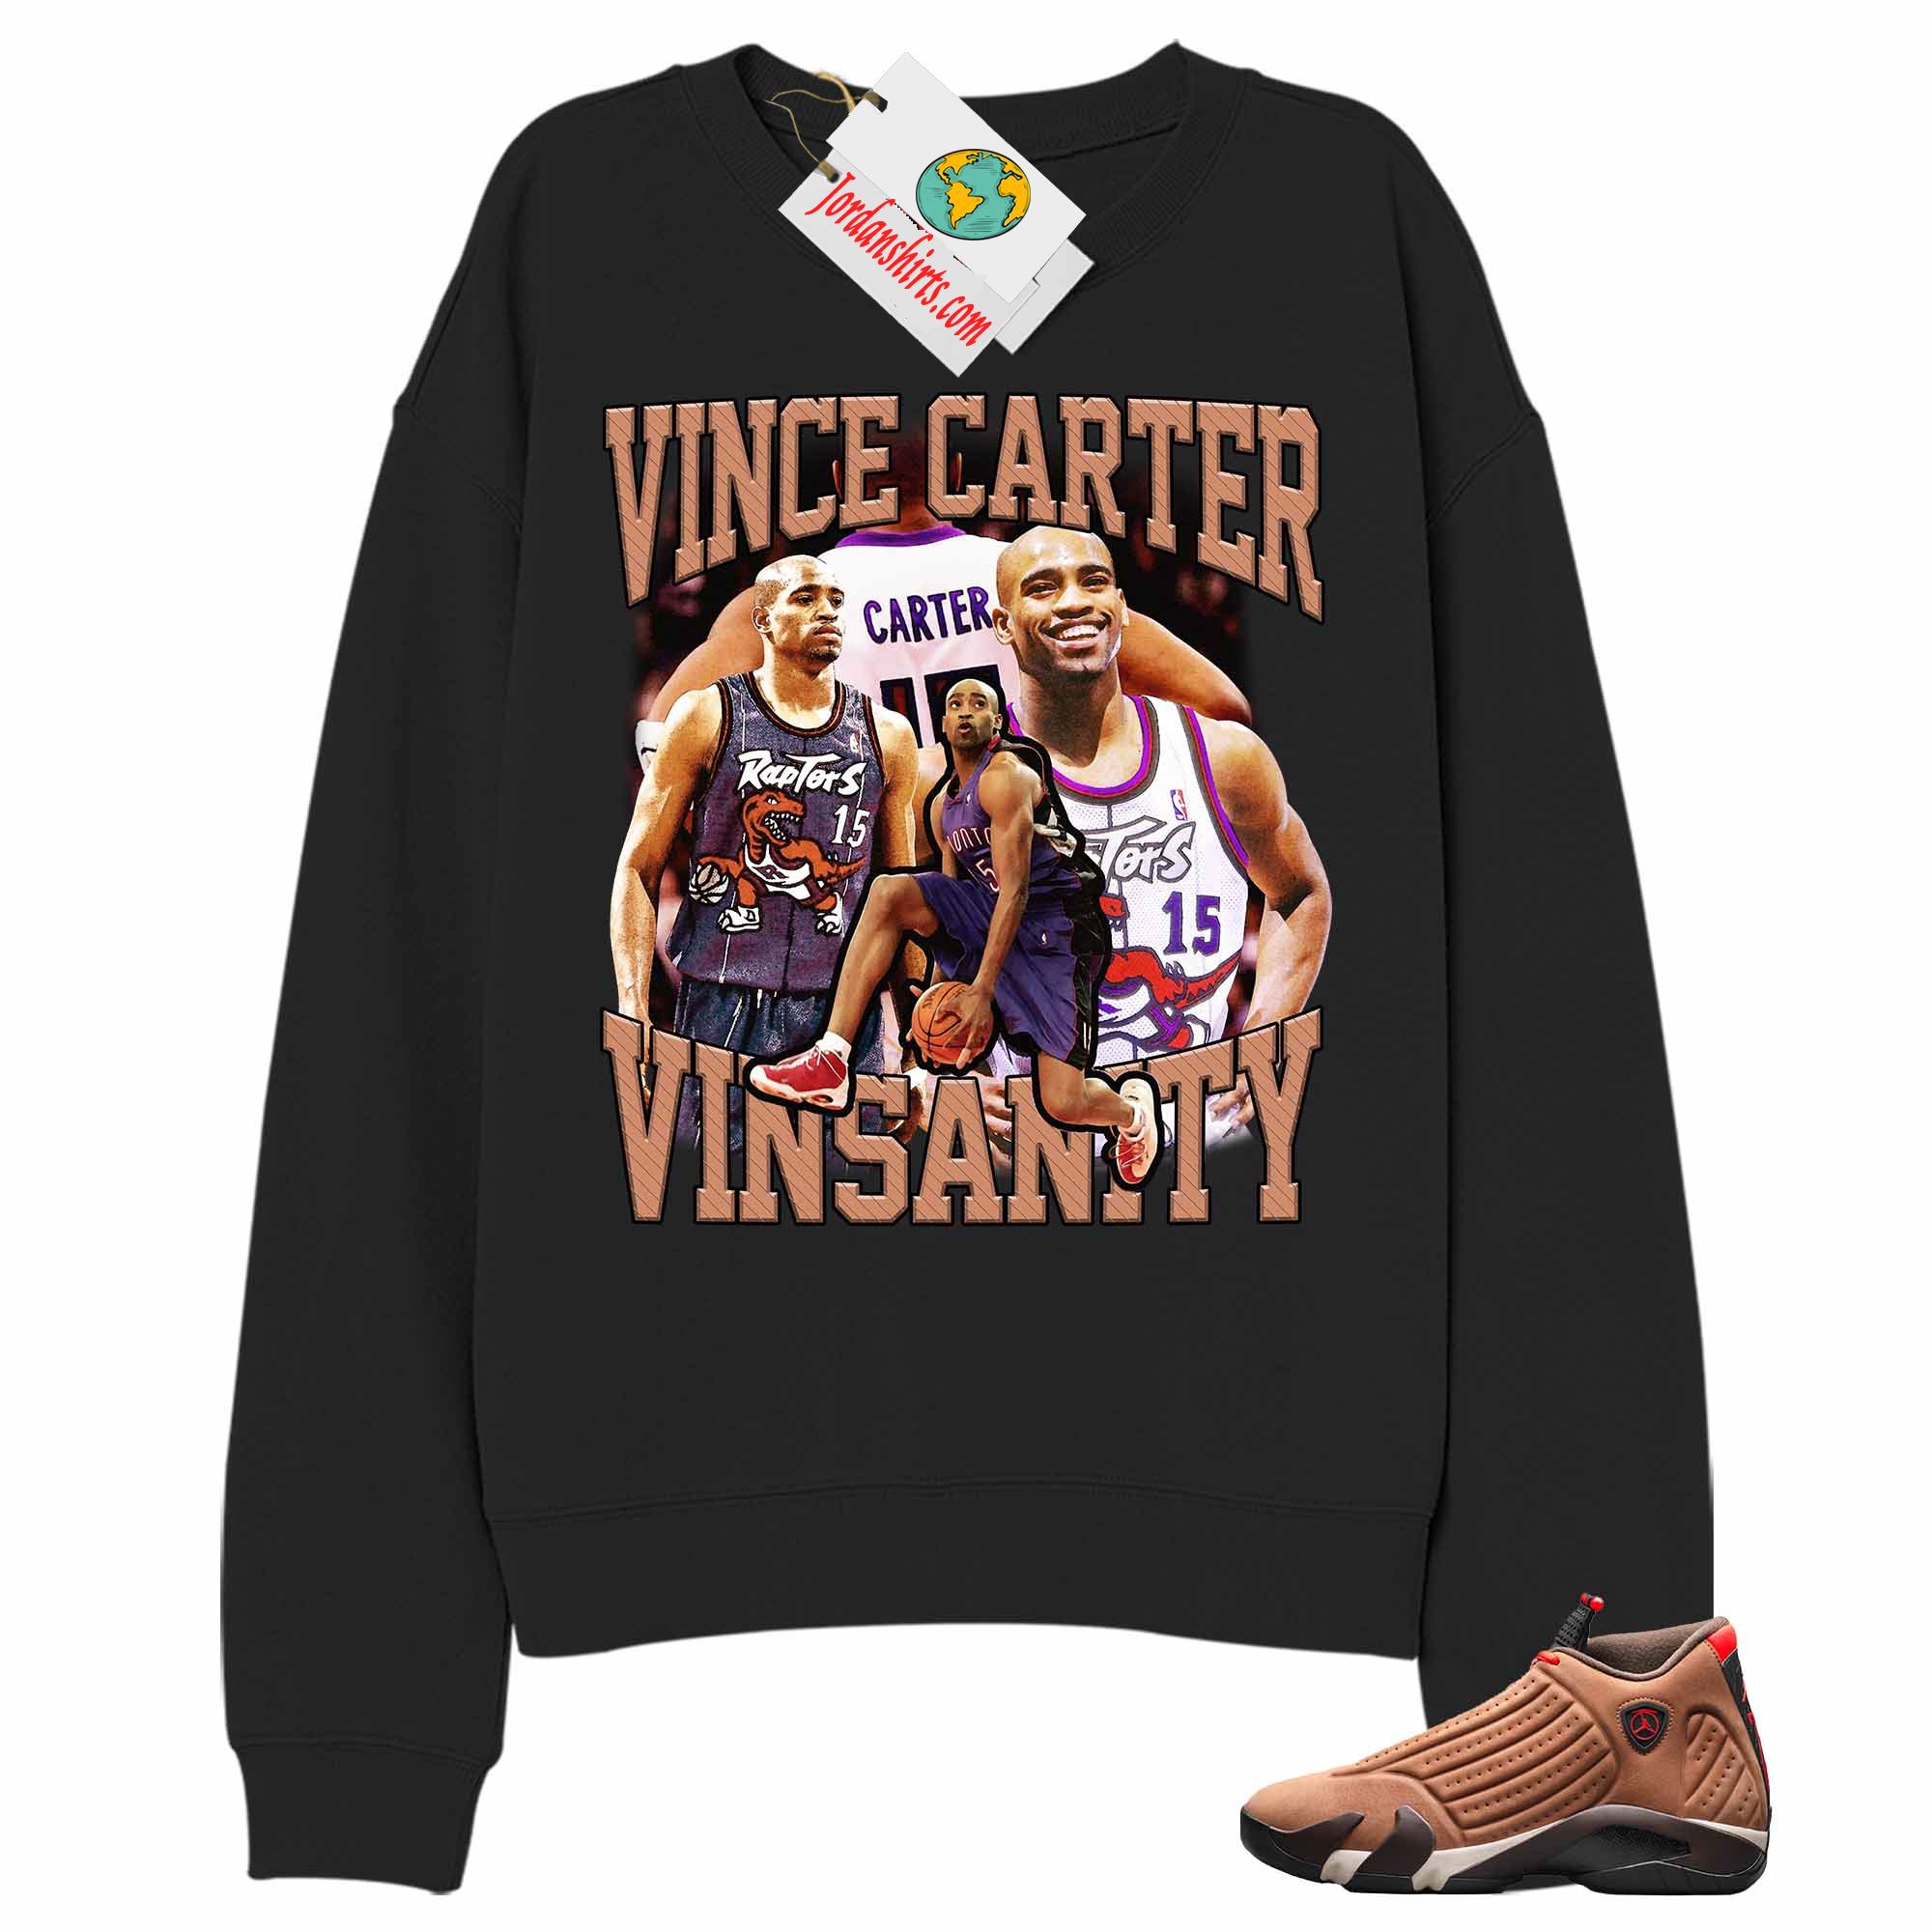 Jordan 14 Sweatshirt, Vince Carter Vinsanity Basketball 90s Retro Vintage Black Sweatshirt Air Jordan 14 Winterized 14s Full Size Up To 5xl